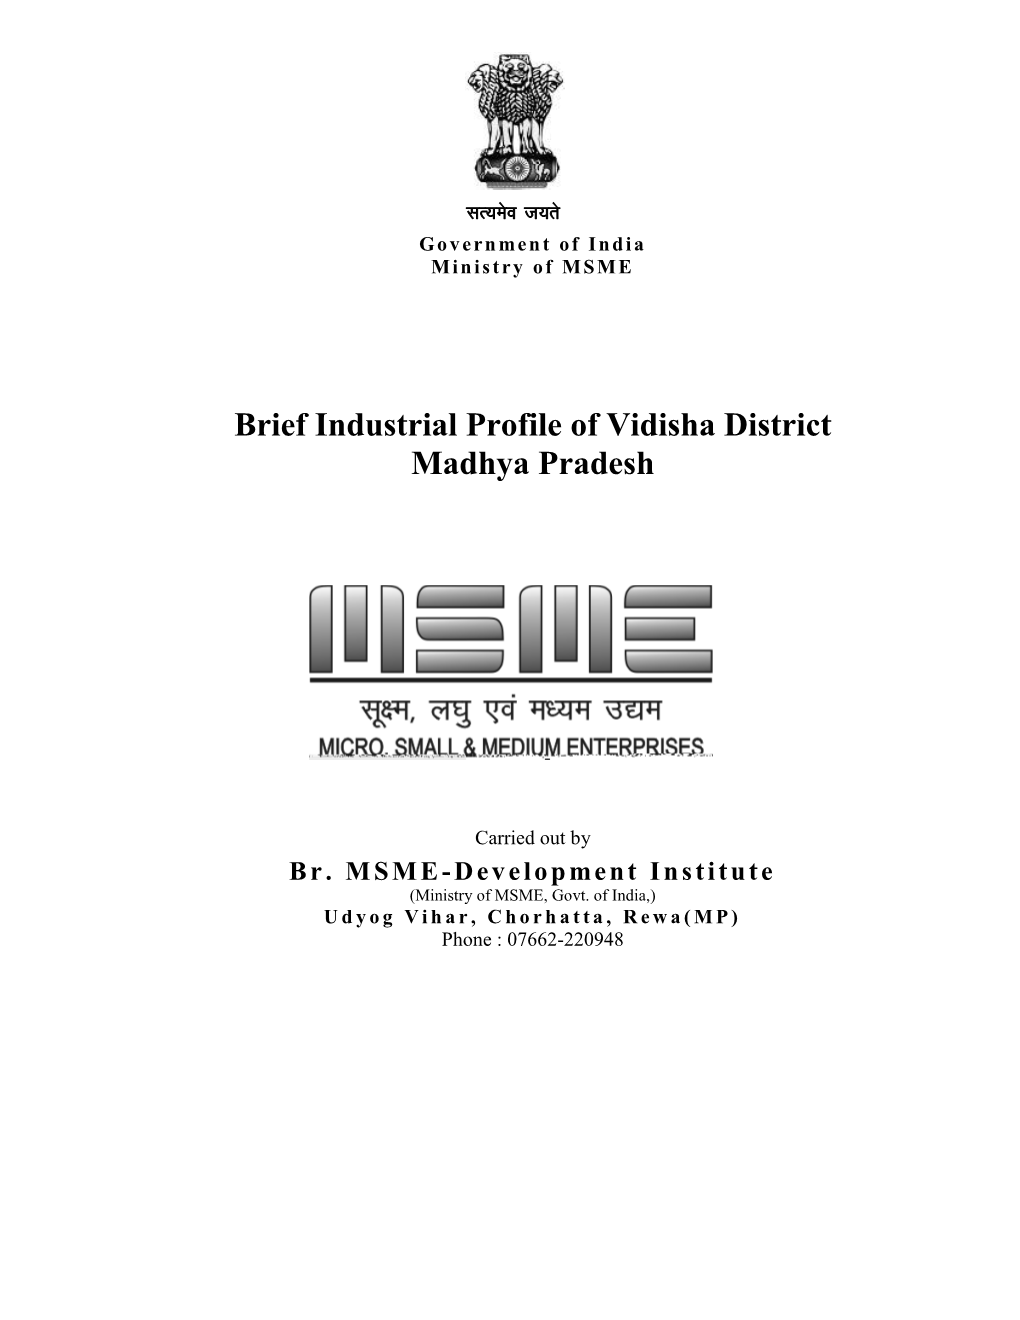 Brief Industrial Profile of Vidisha District Madhya Pradesh